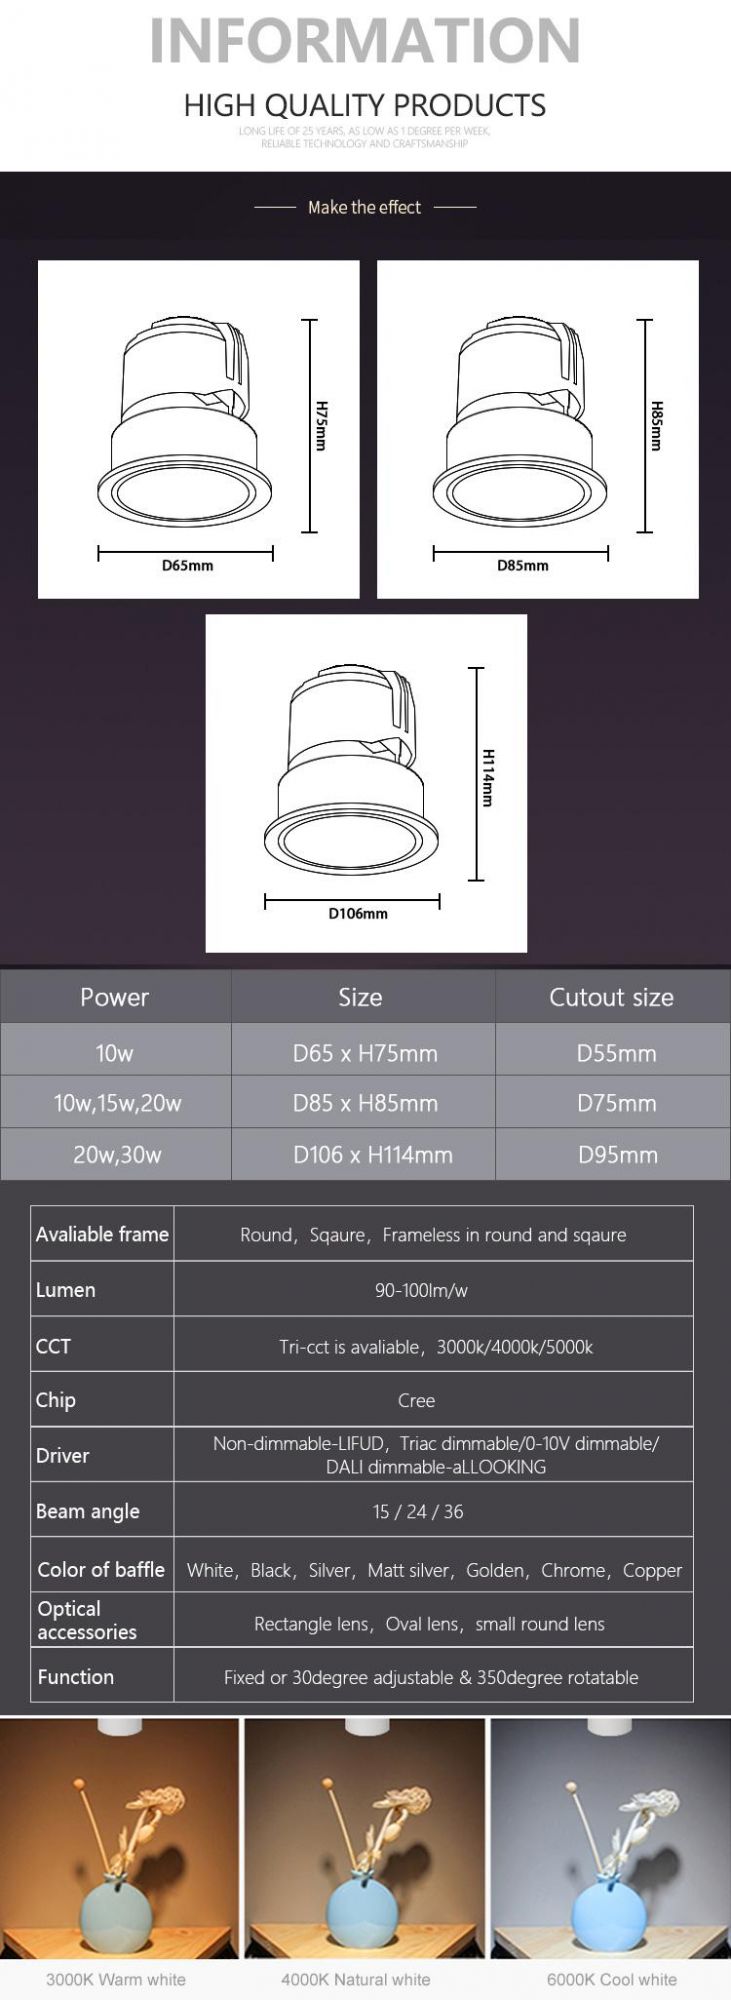 Anti-Glare IP65 Waterproof LED Downlight Spotlight Cutout 95mm 25W